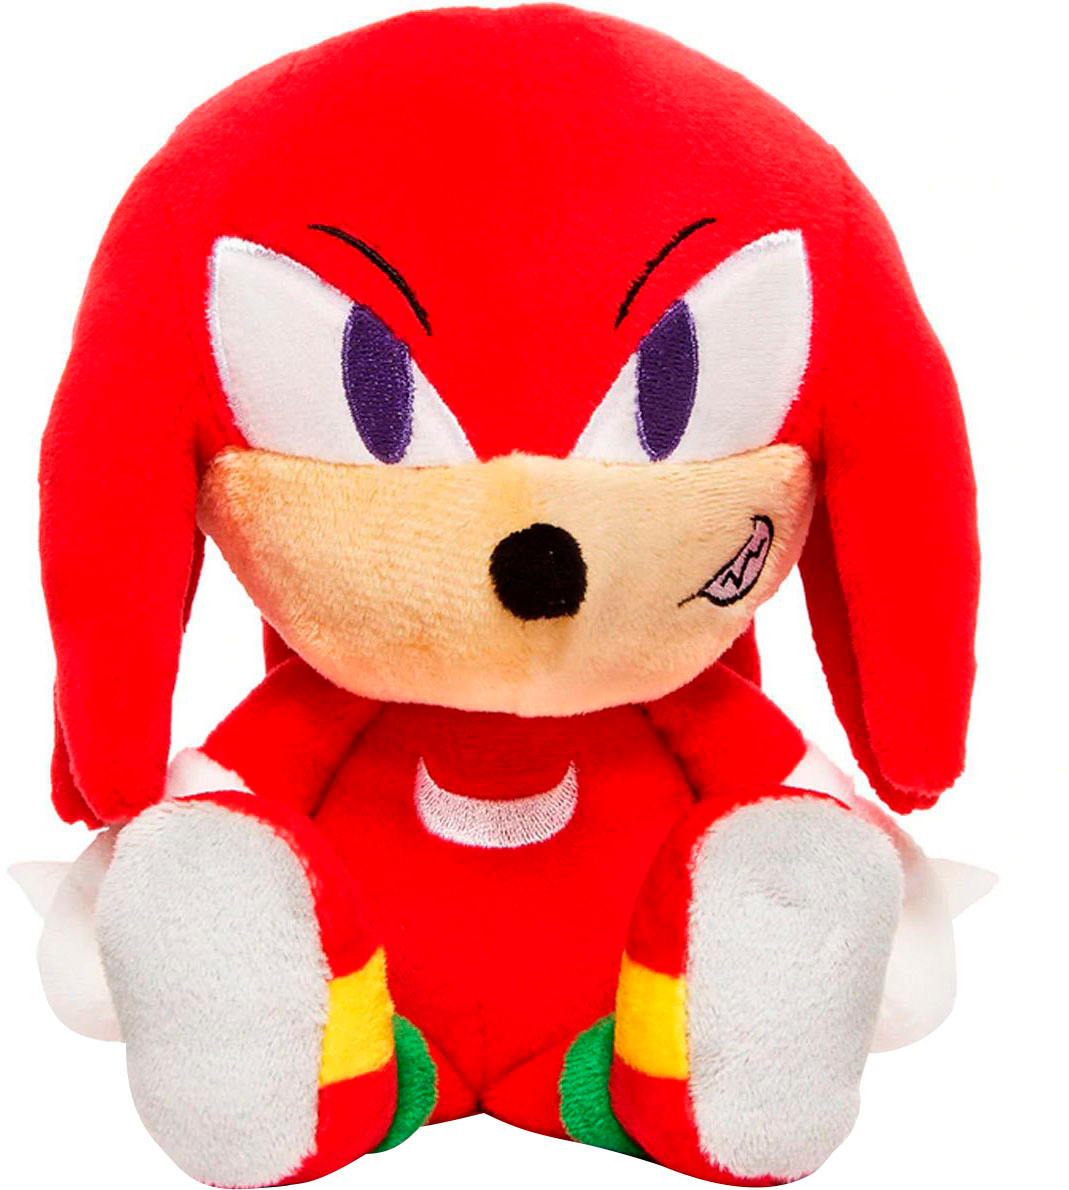 Sonic the Hedgehog 3 Vinyl Figure Sonic and Knuckles 2-Pack - Kidrobot